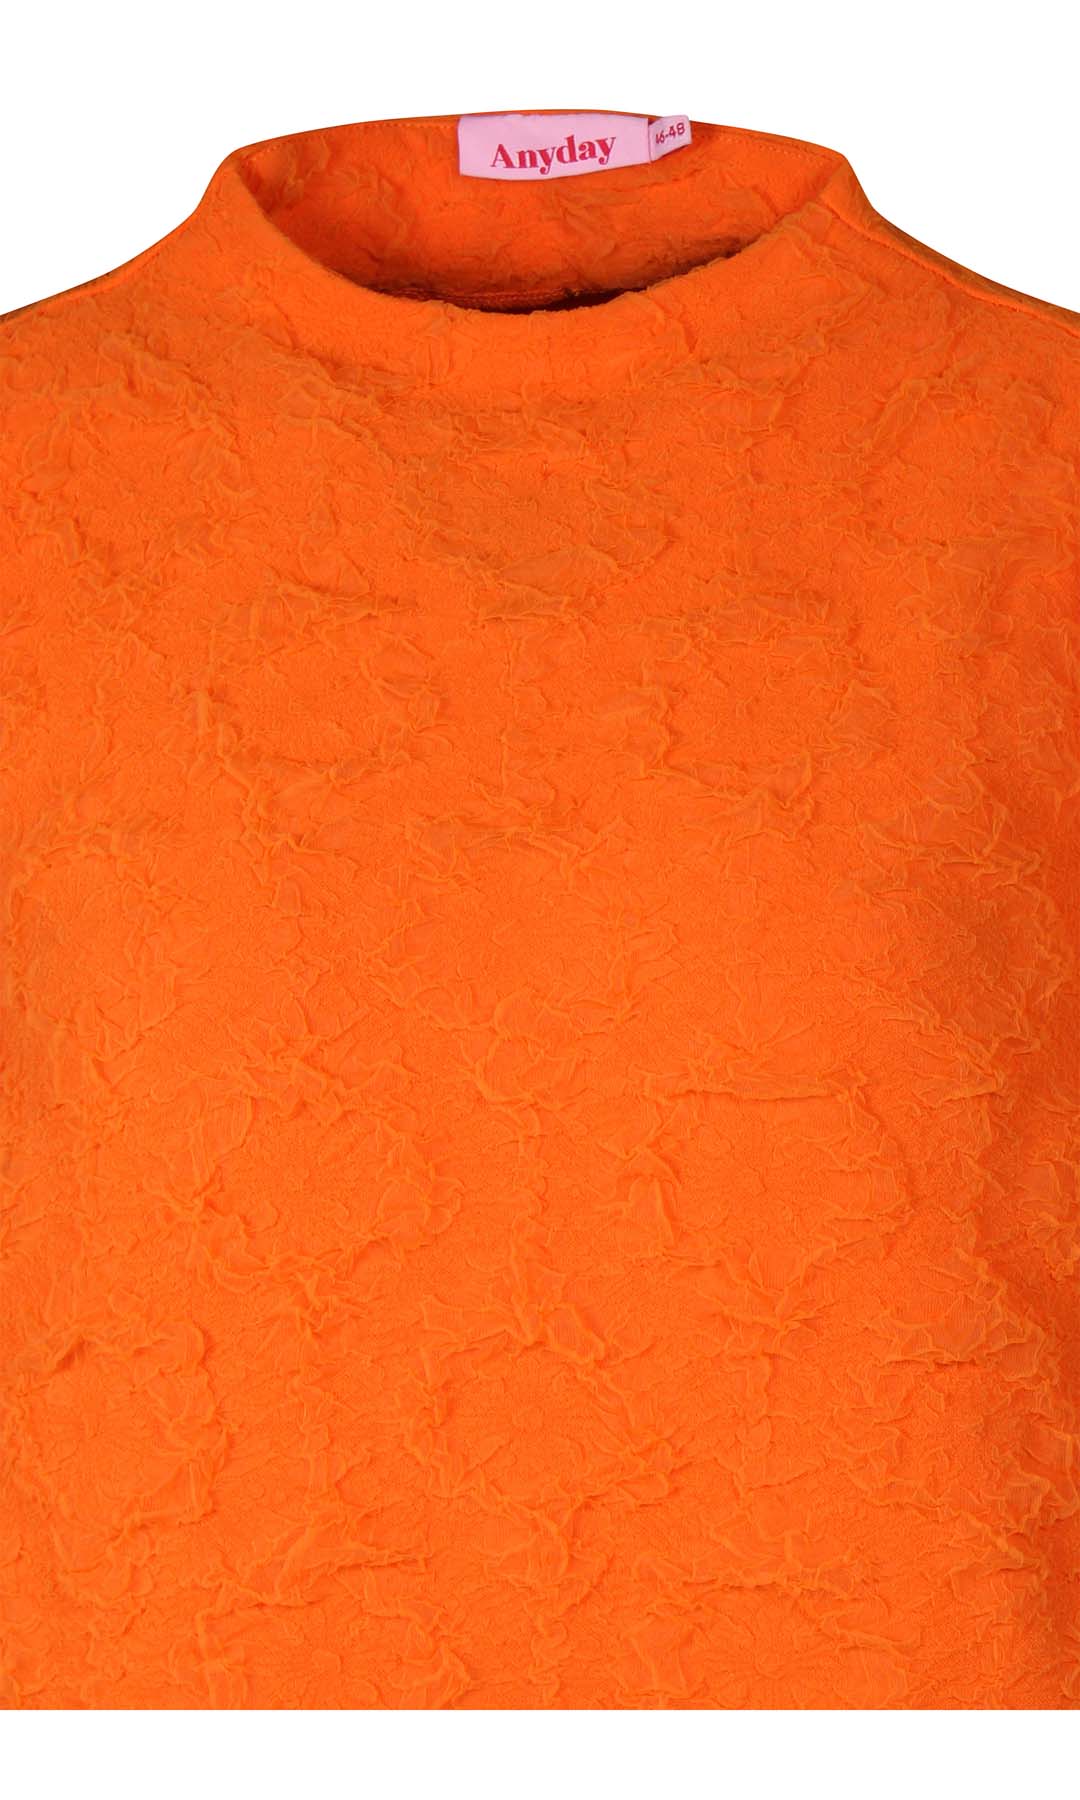 Meliah 069 - Dress - Orange